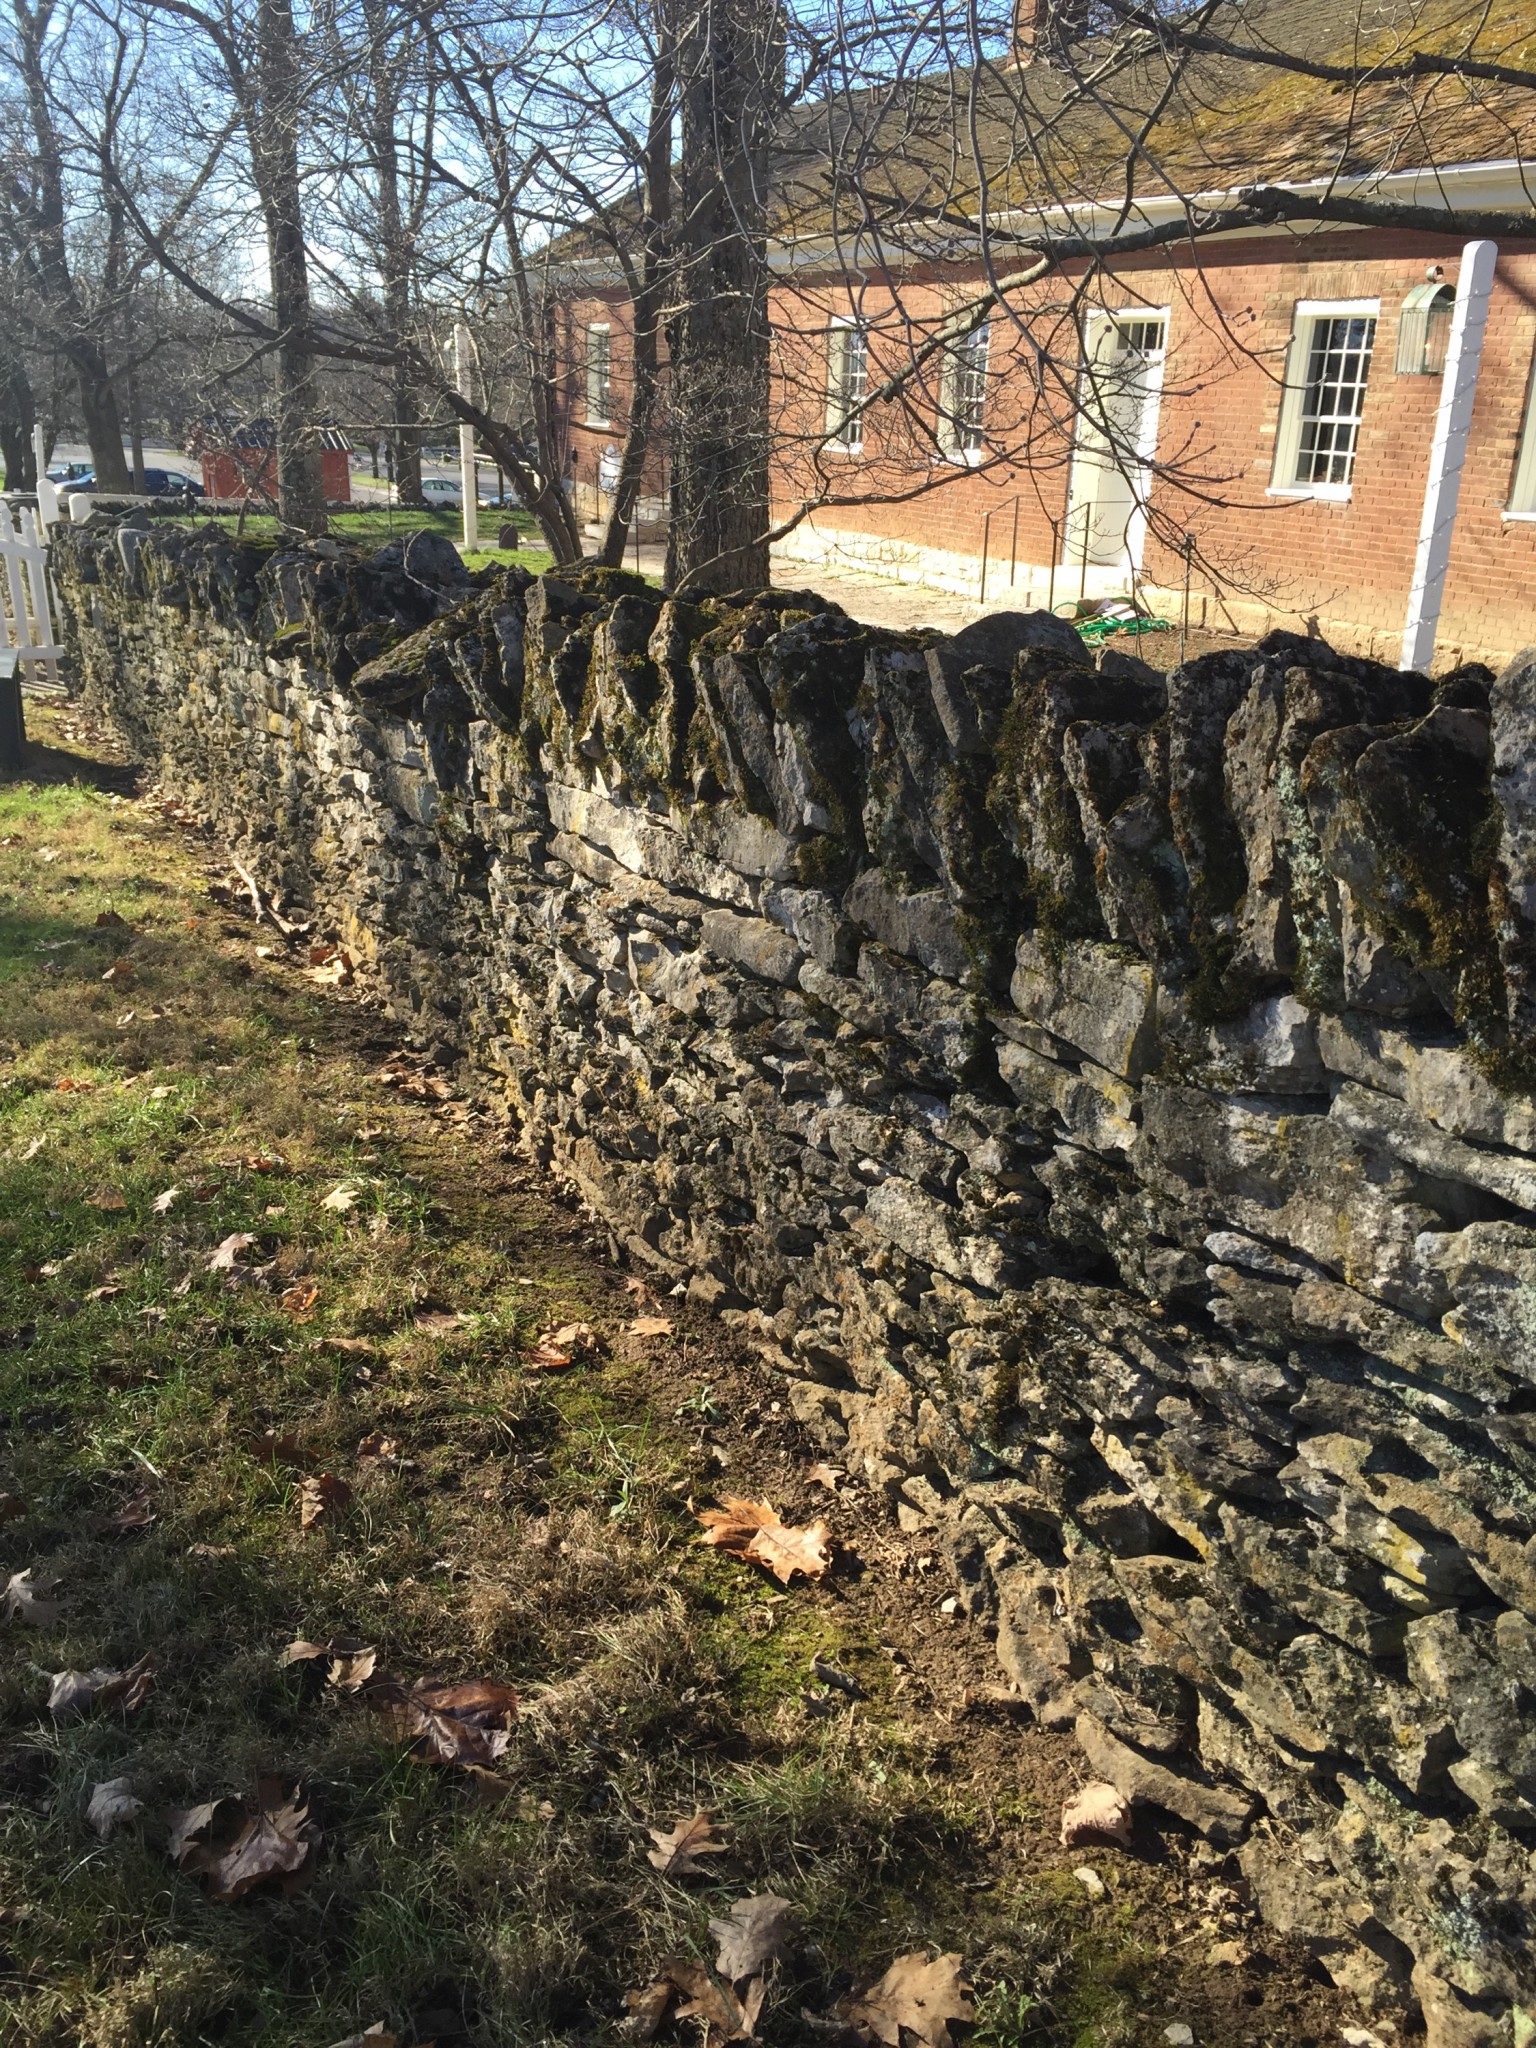 The Rock Wall at Shakertown Village